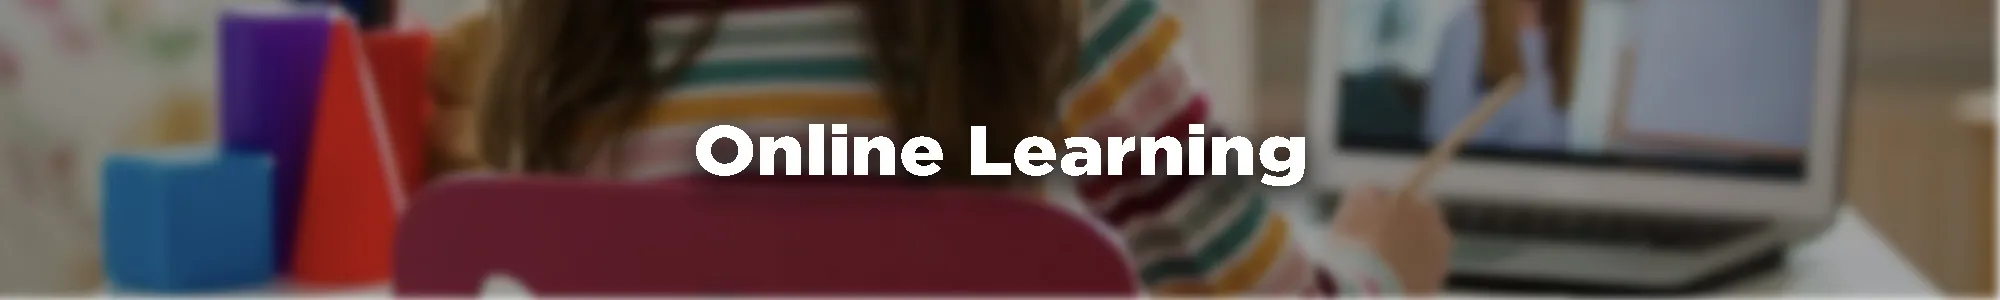 Online_Learning